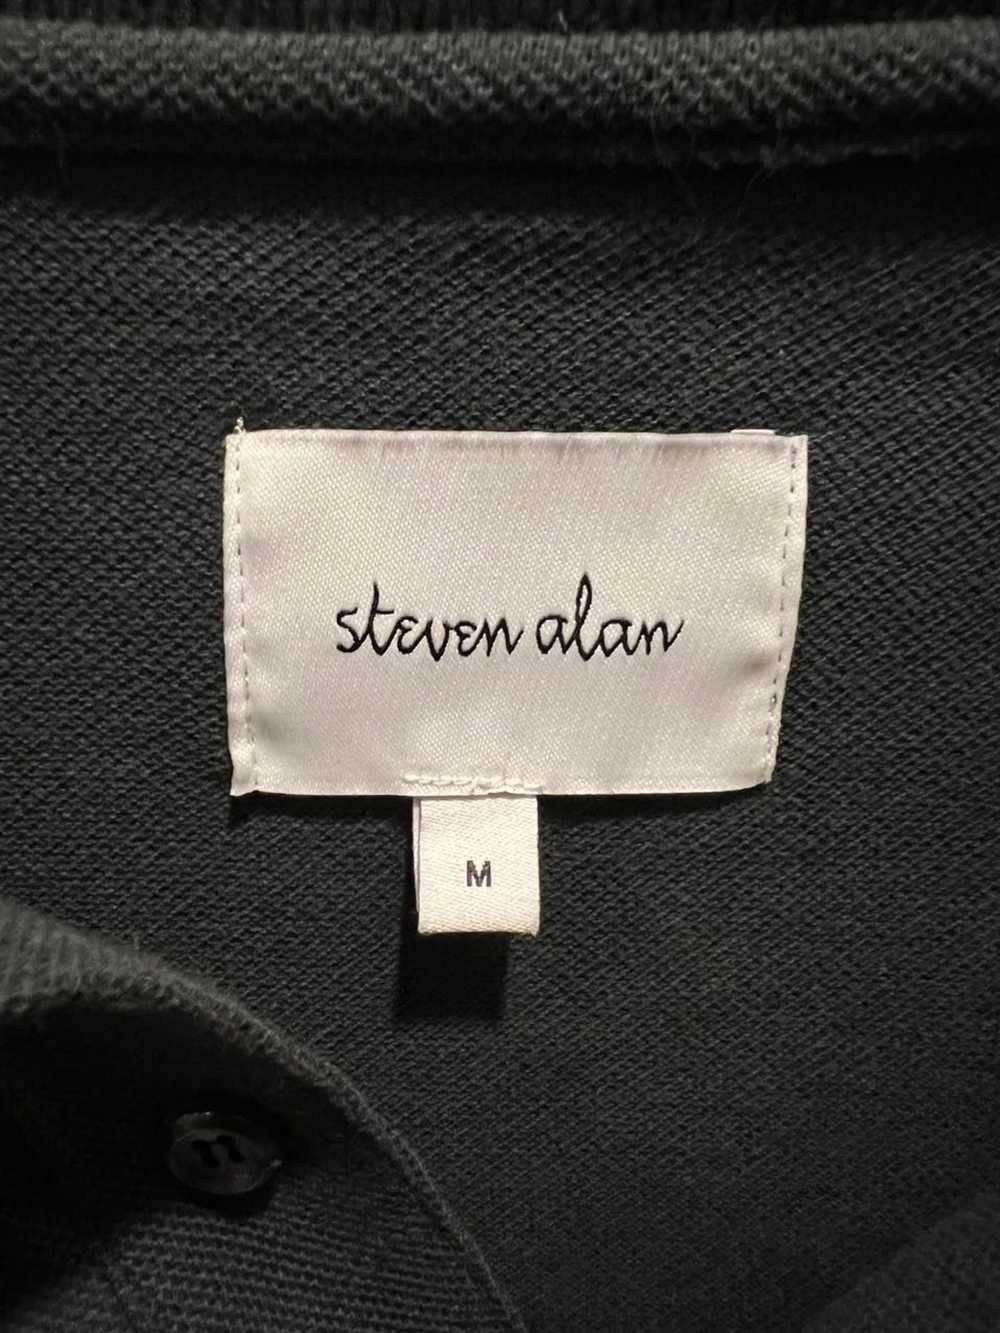 Steven Alan Steve Alan Polo - image 2